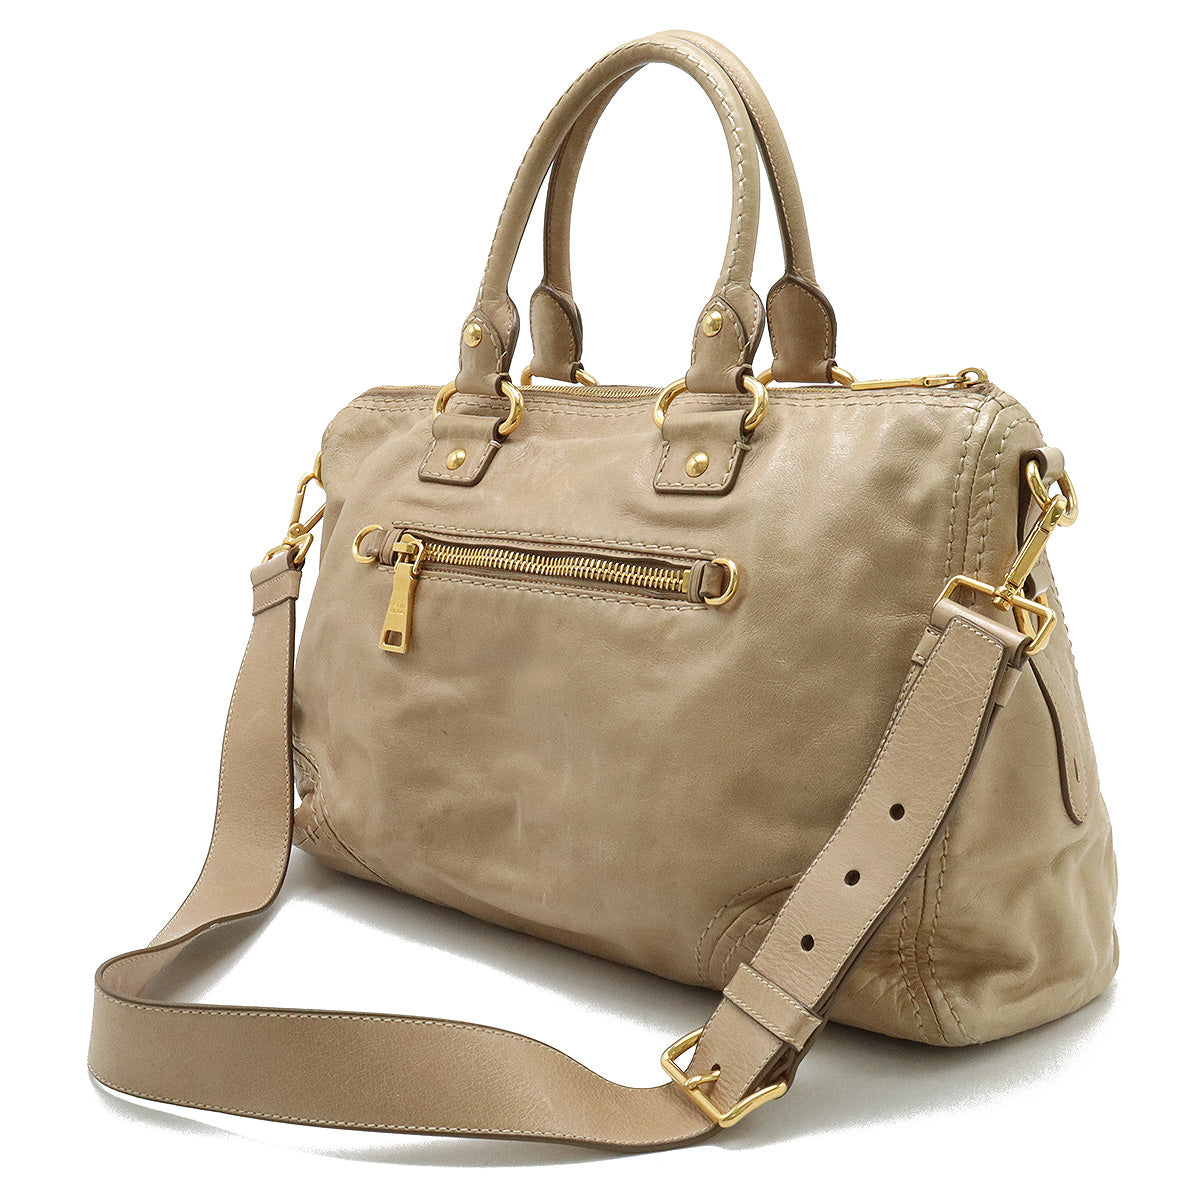 PRADA Prada Handbag Mini Boston Bag 2WAY Shoulder Bag Leather Beige Gold